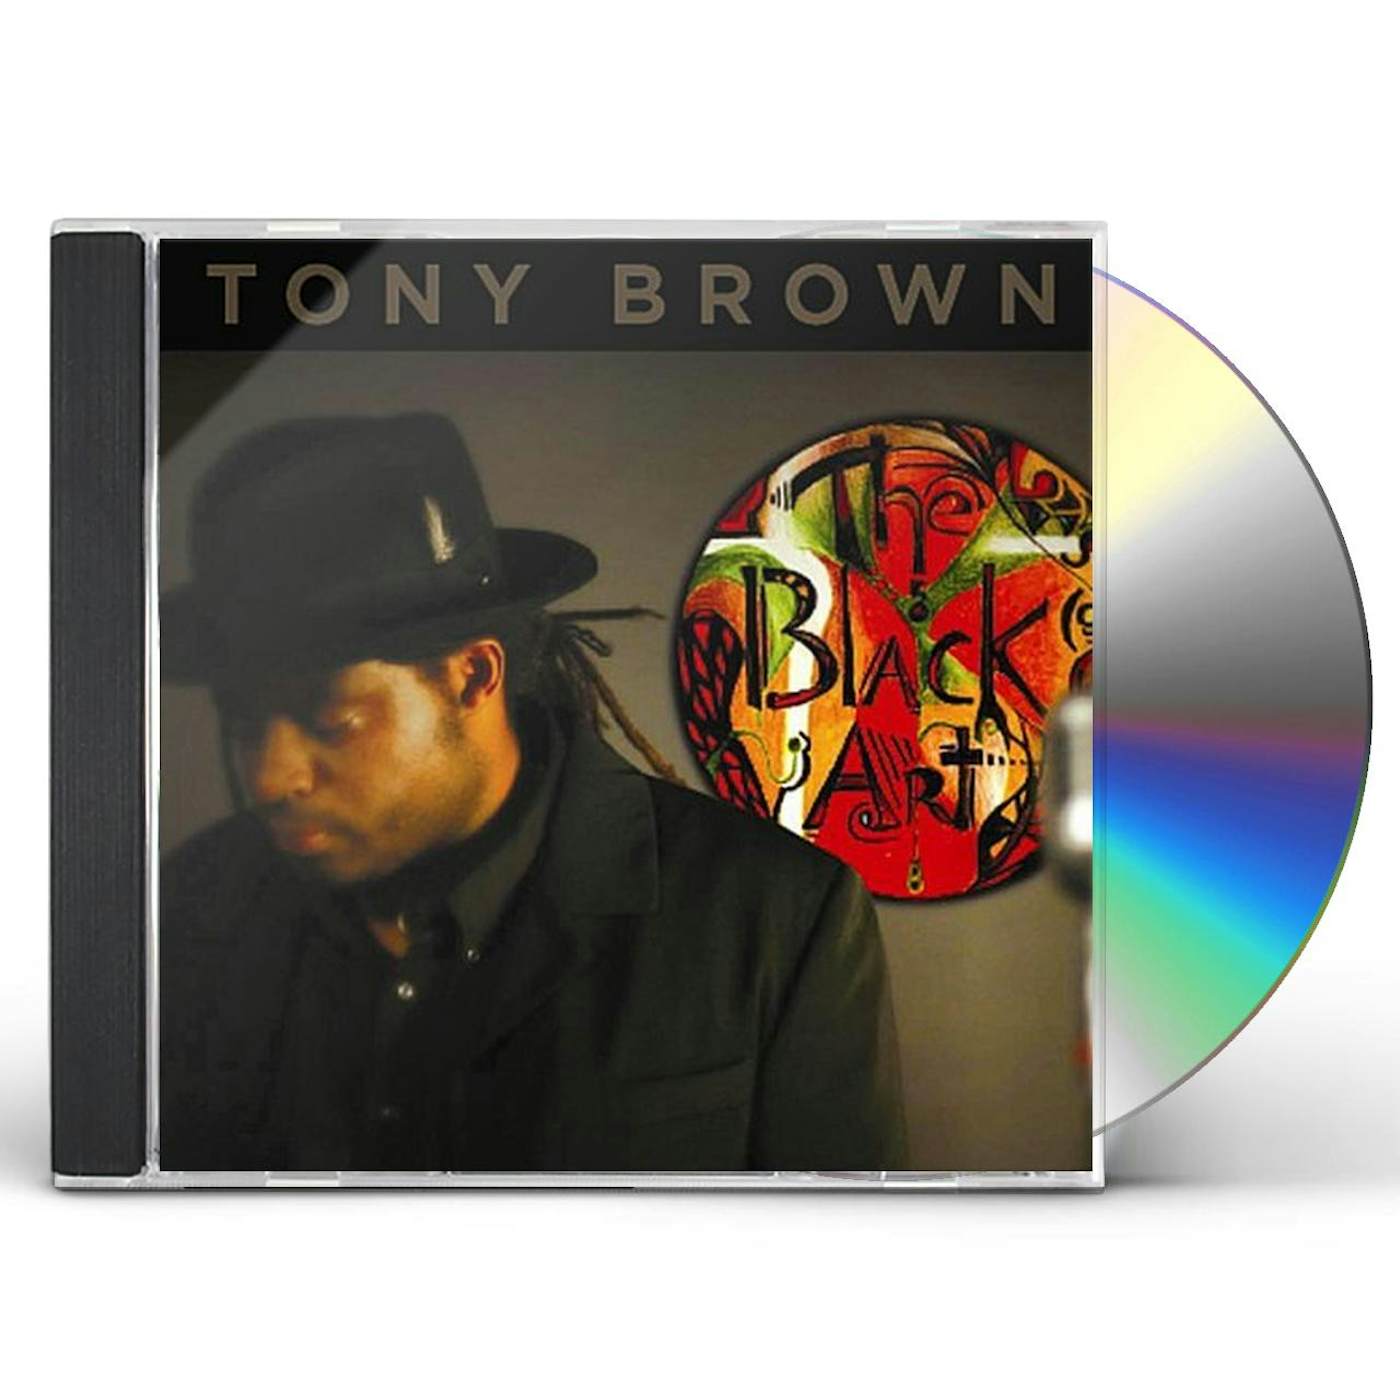 Tony Brown BLACK ART CD